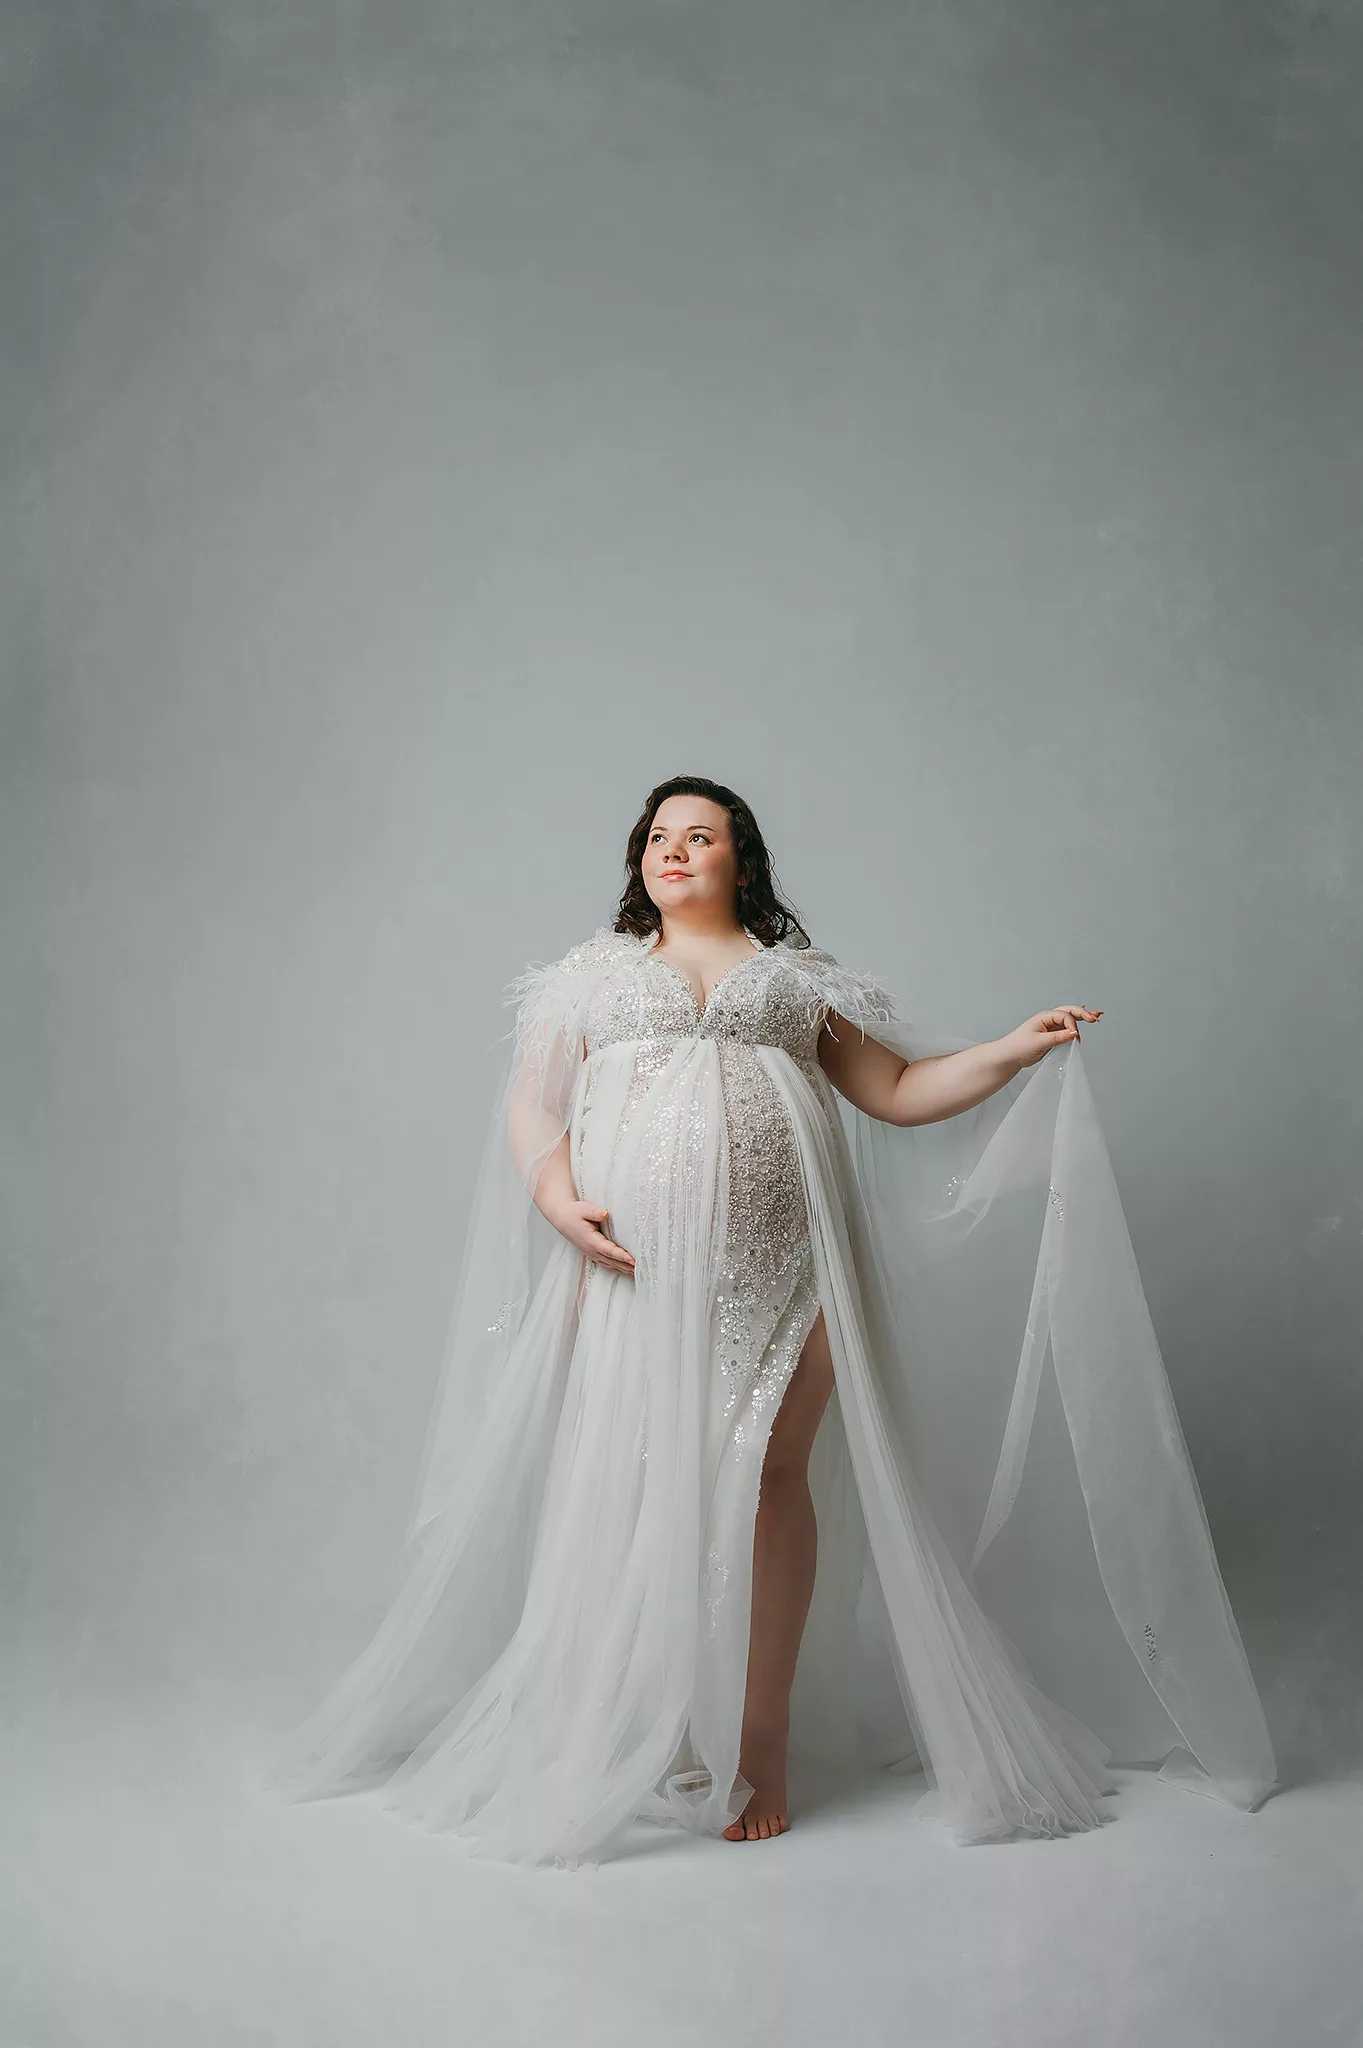 Elmira, NY Maternity Photographer | Glam maternity shoot with white dress